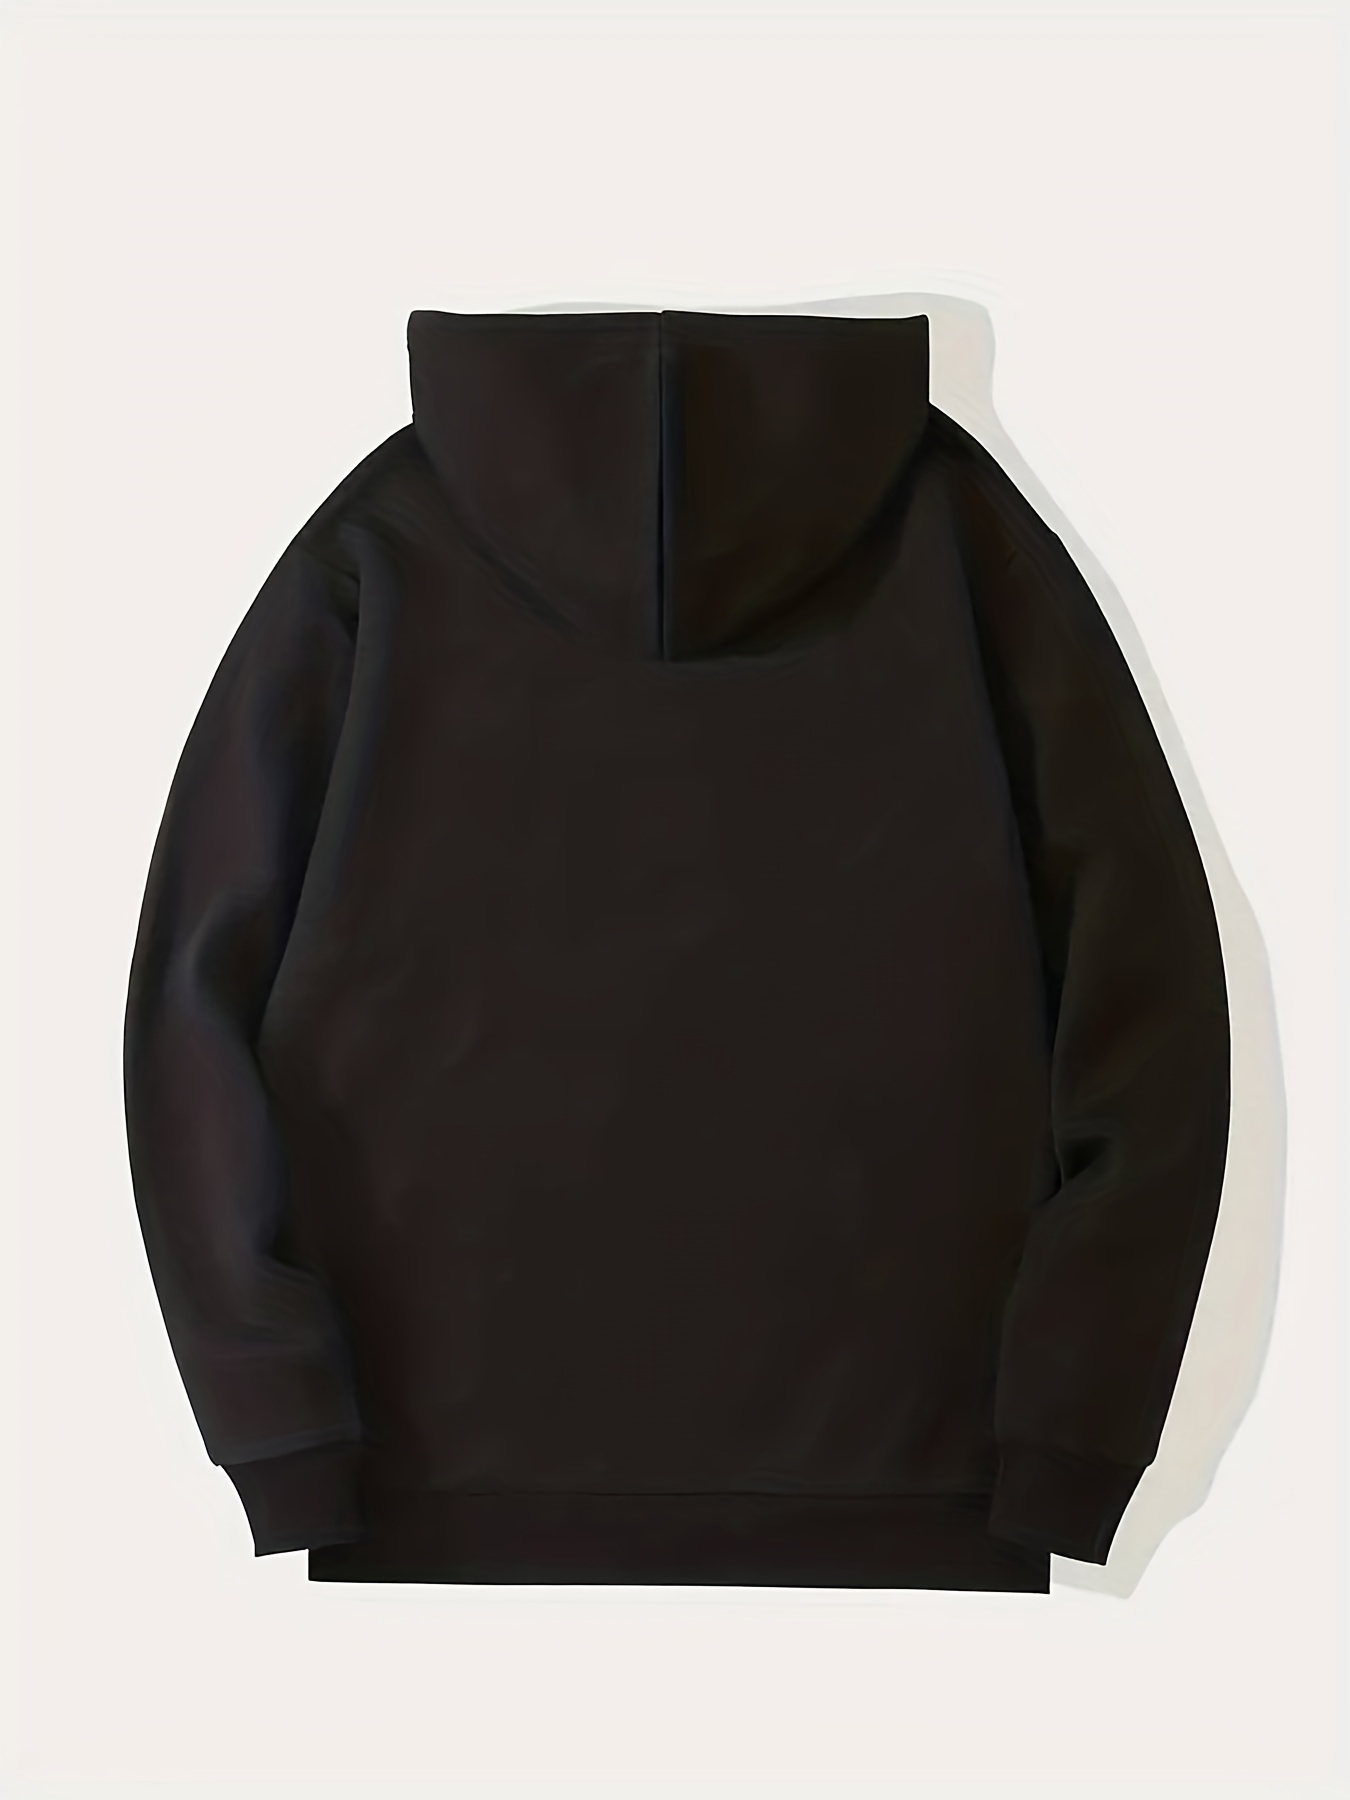 headphone smile print hoodie hoodies for men mens casual graphic design pullover hooded sweatshirt with kangaroo pocket streetwear for winter fall as gifts details 16